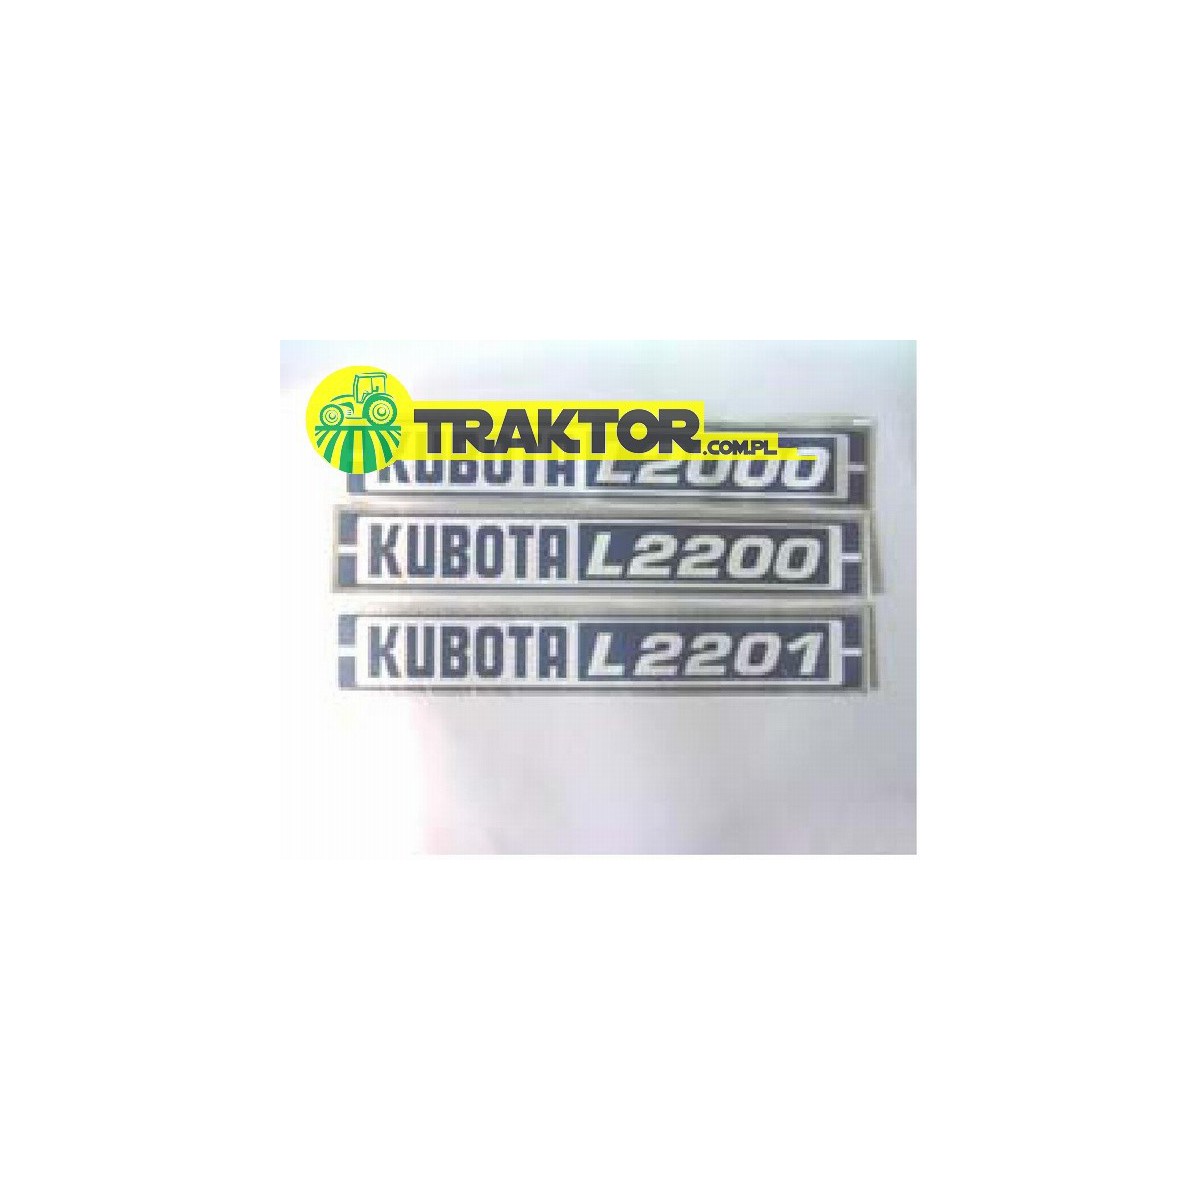 KUBOTA L2200 sticker set